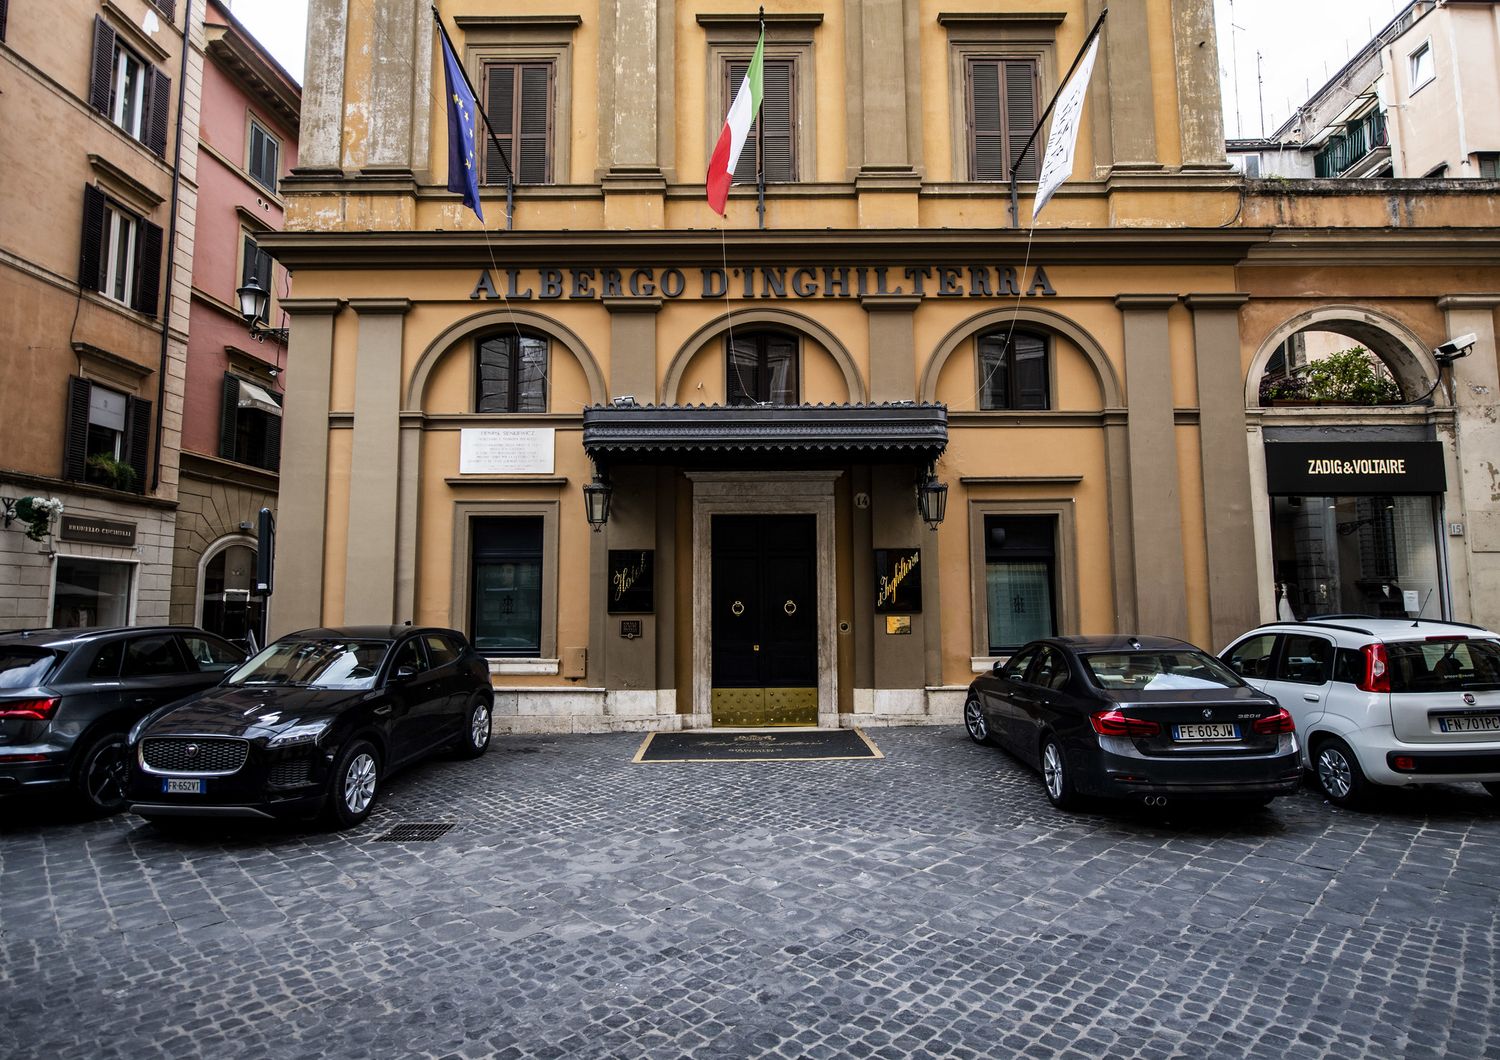 L'albergo d'Inghilterra di Roma chiuso per l'emergenza coronavirus